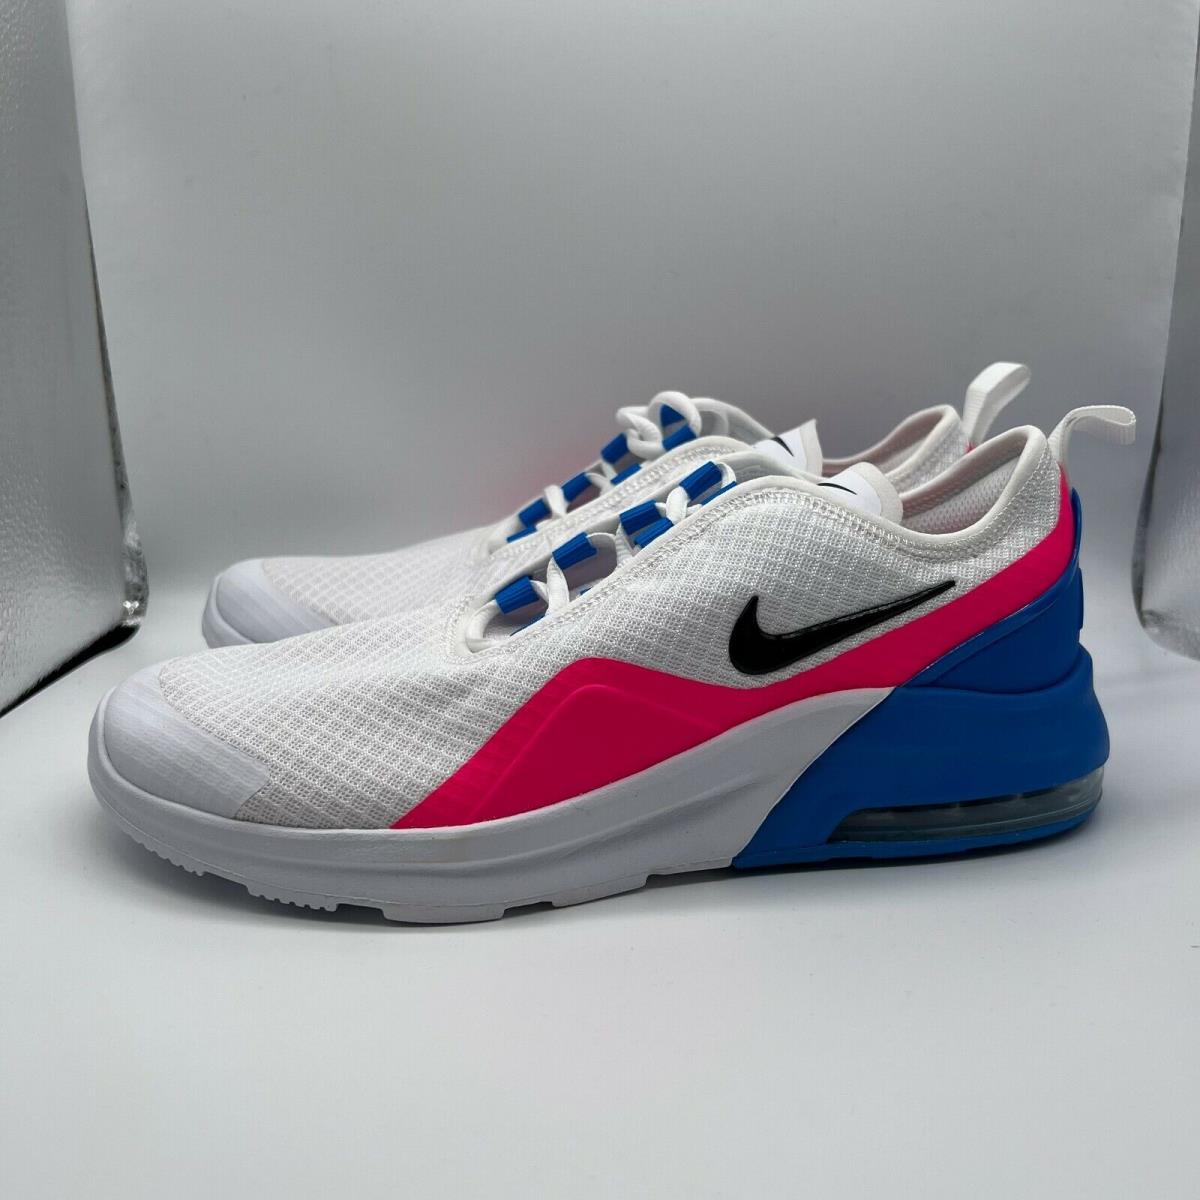 Nike shoes Sneaker Shoes - Multicolor 1